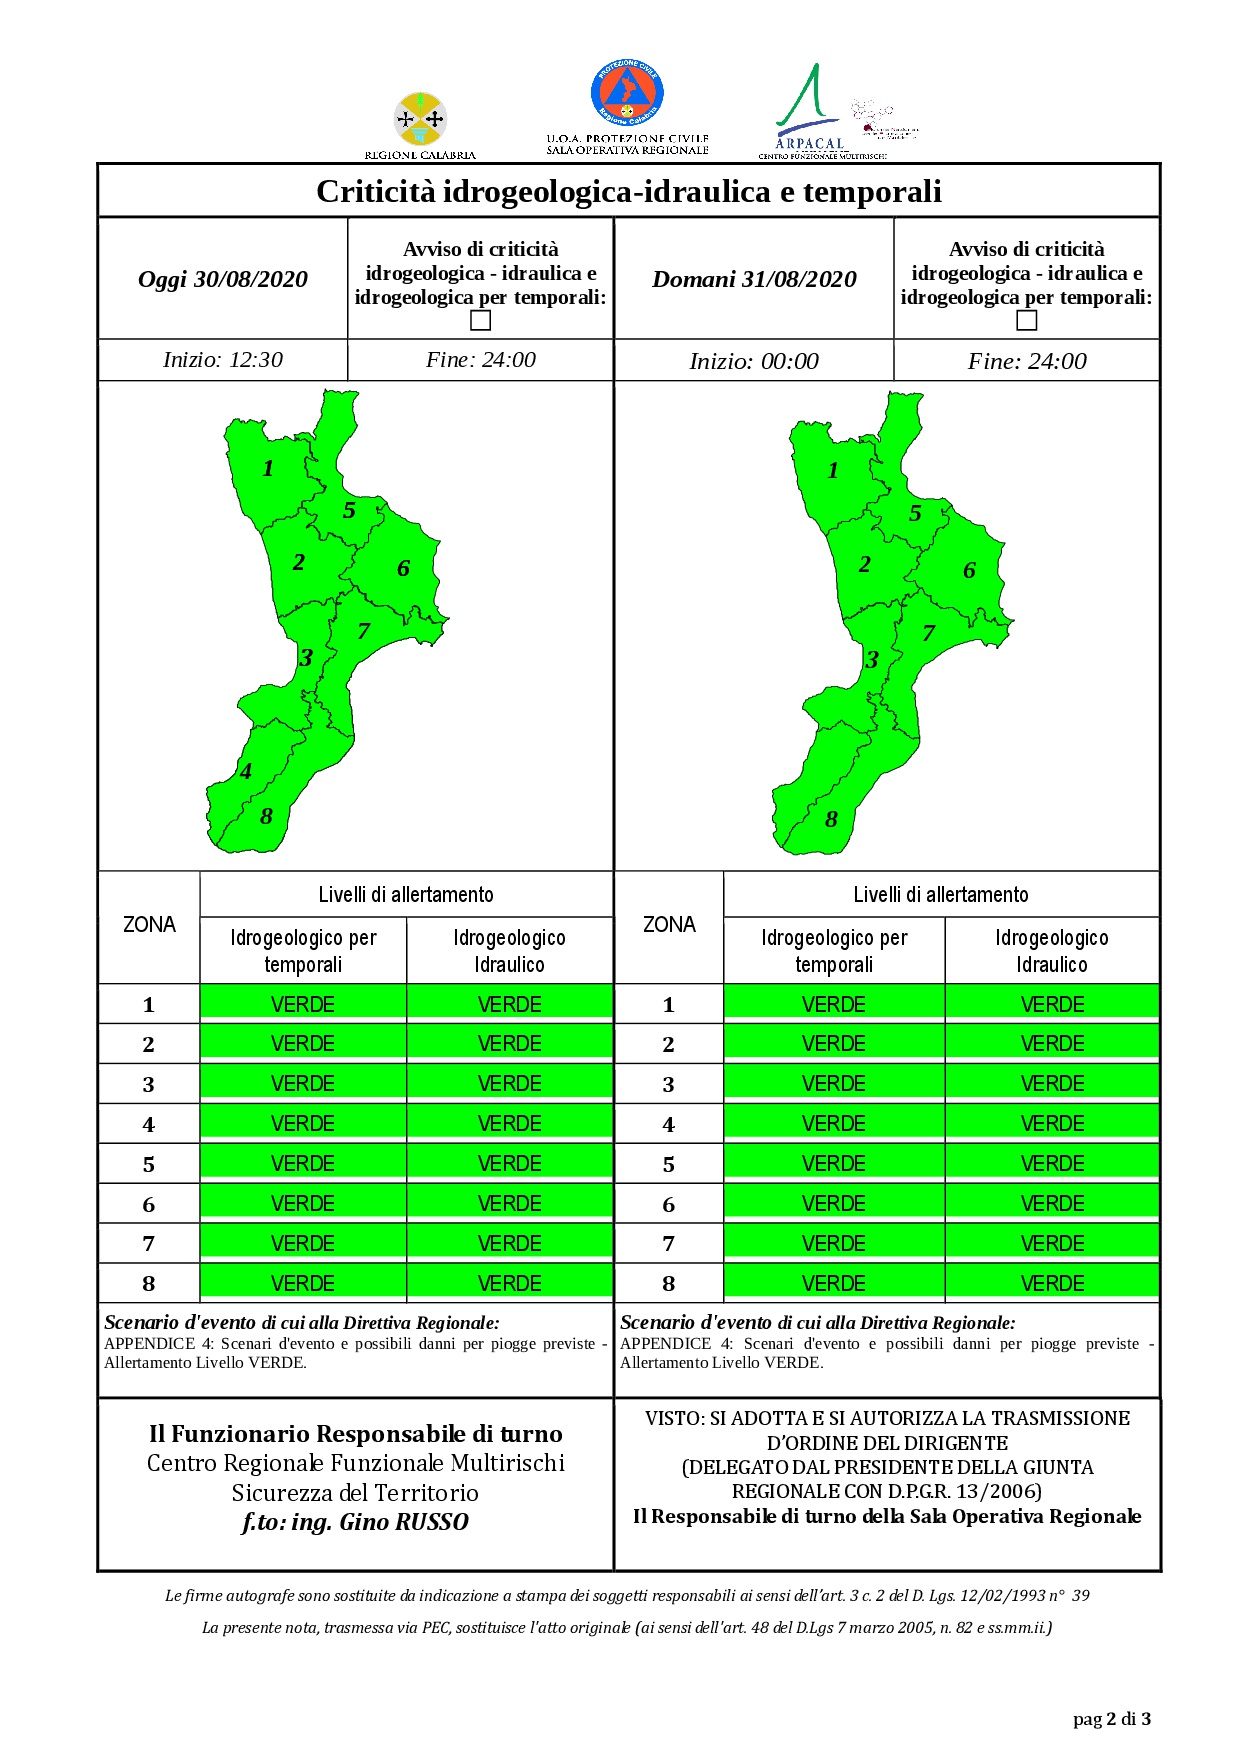 Criticità idrogeologica-idraulica e temporali in Calabria 30-08-2020